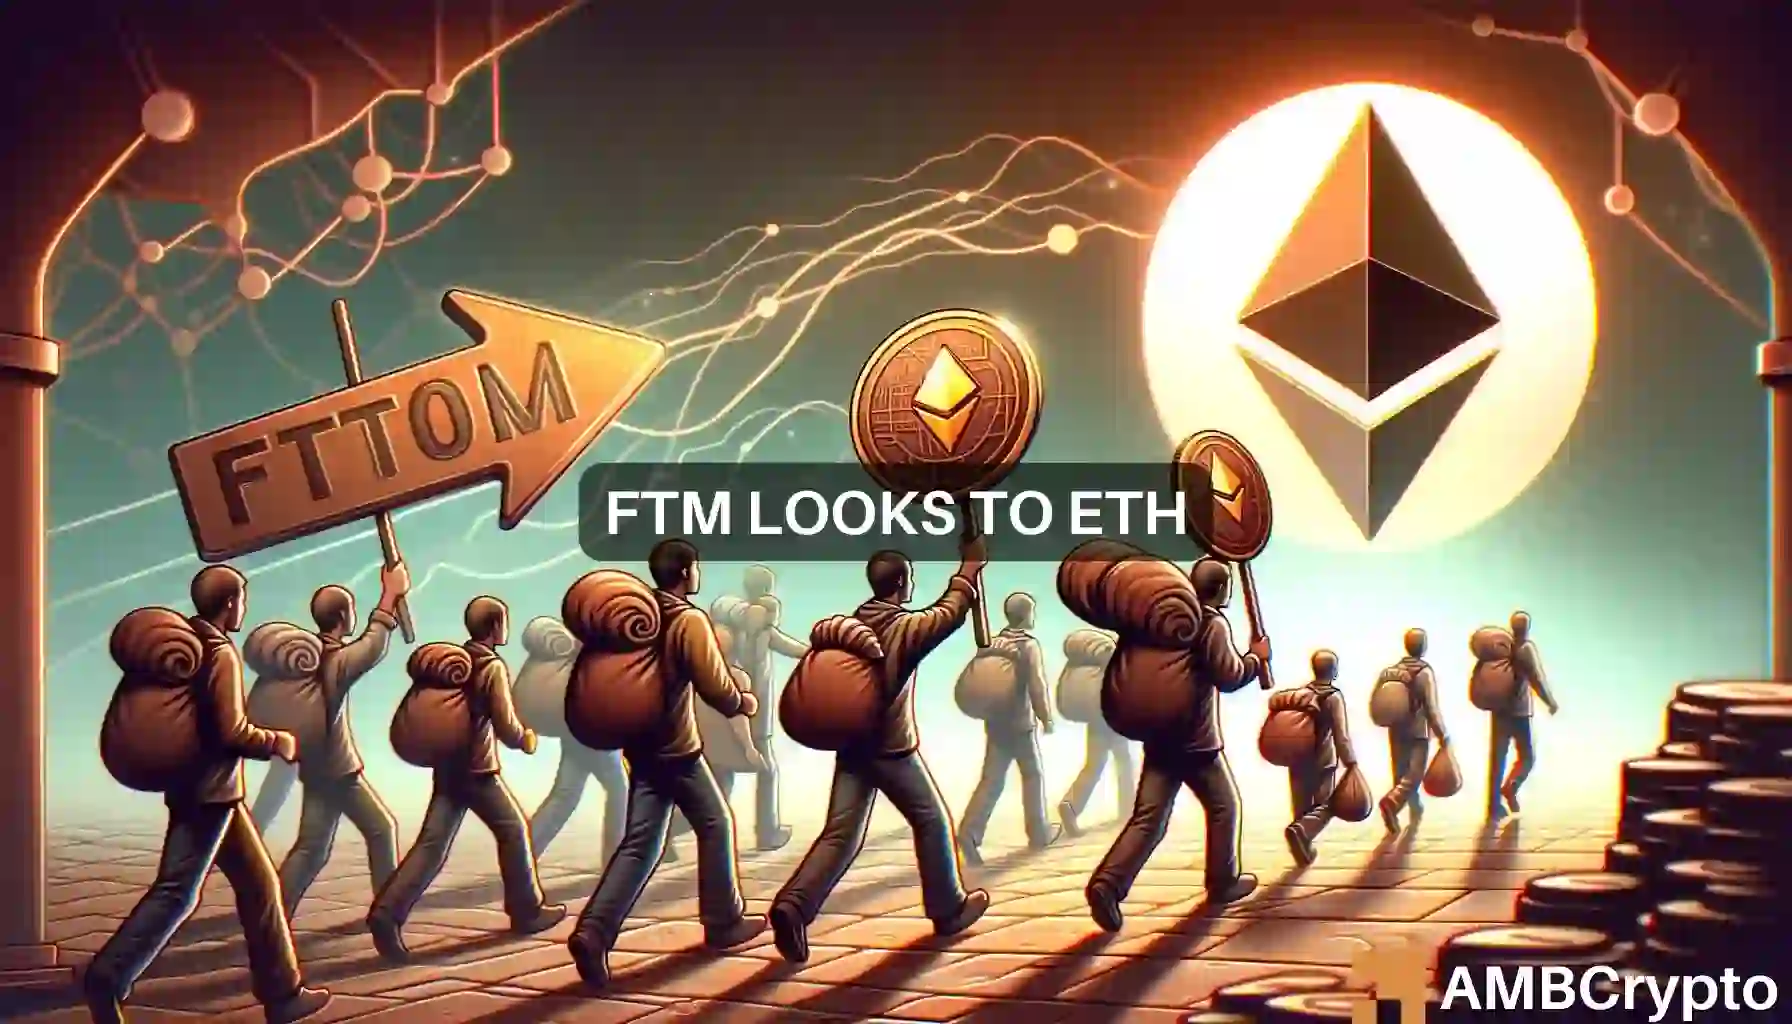 Fantom Sonic: Will Ethereum integration help FTM’s price?